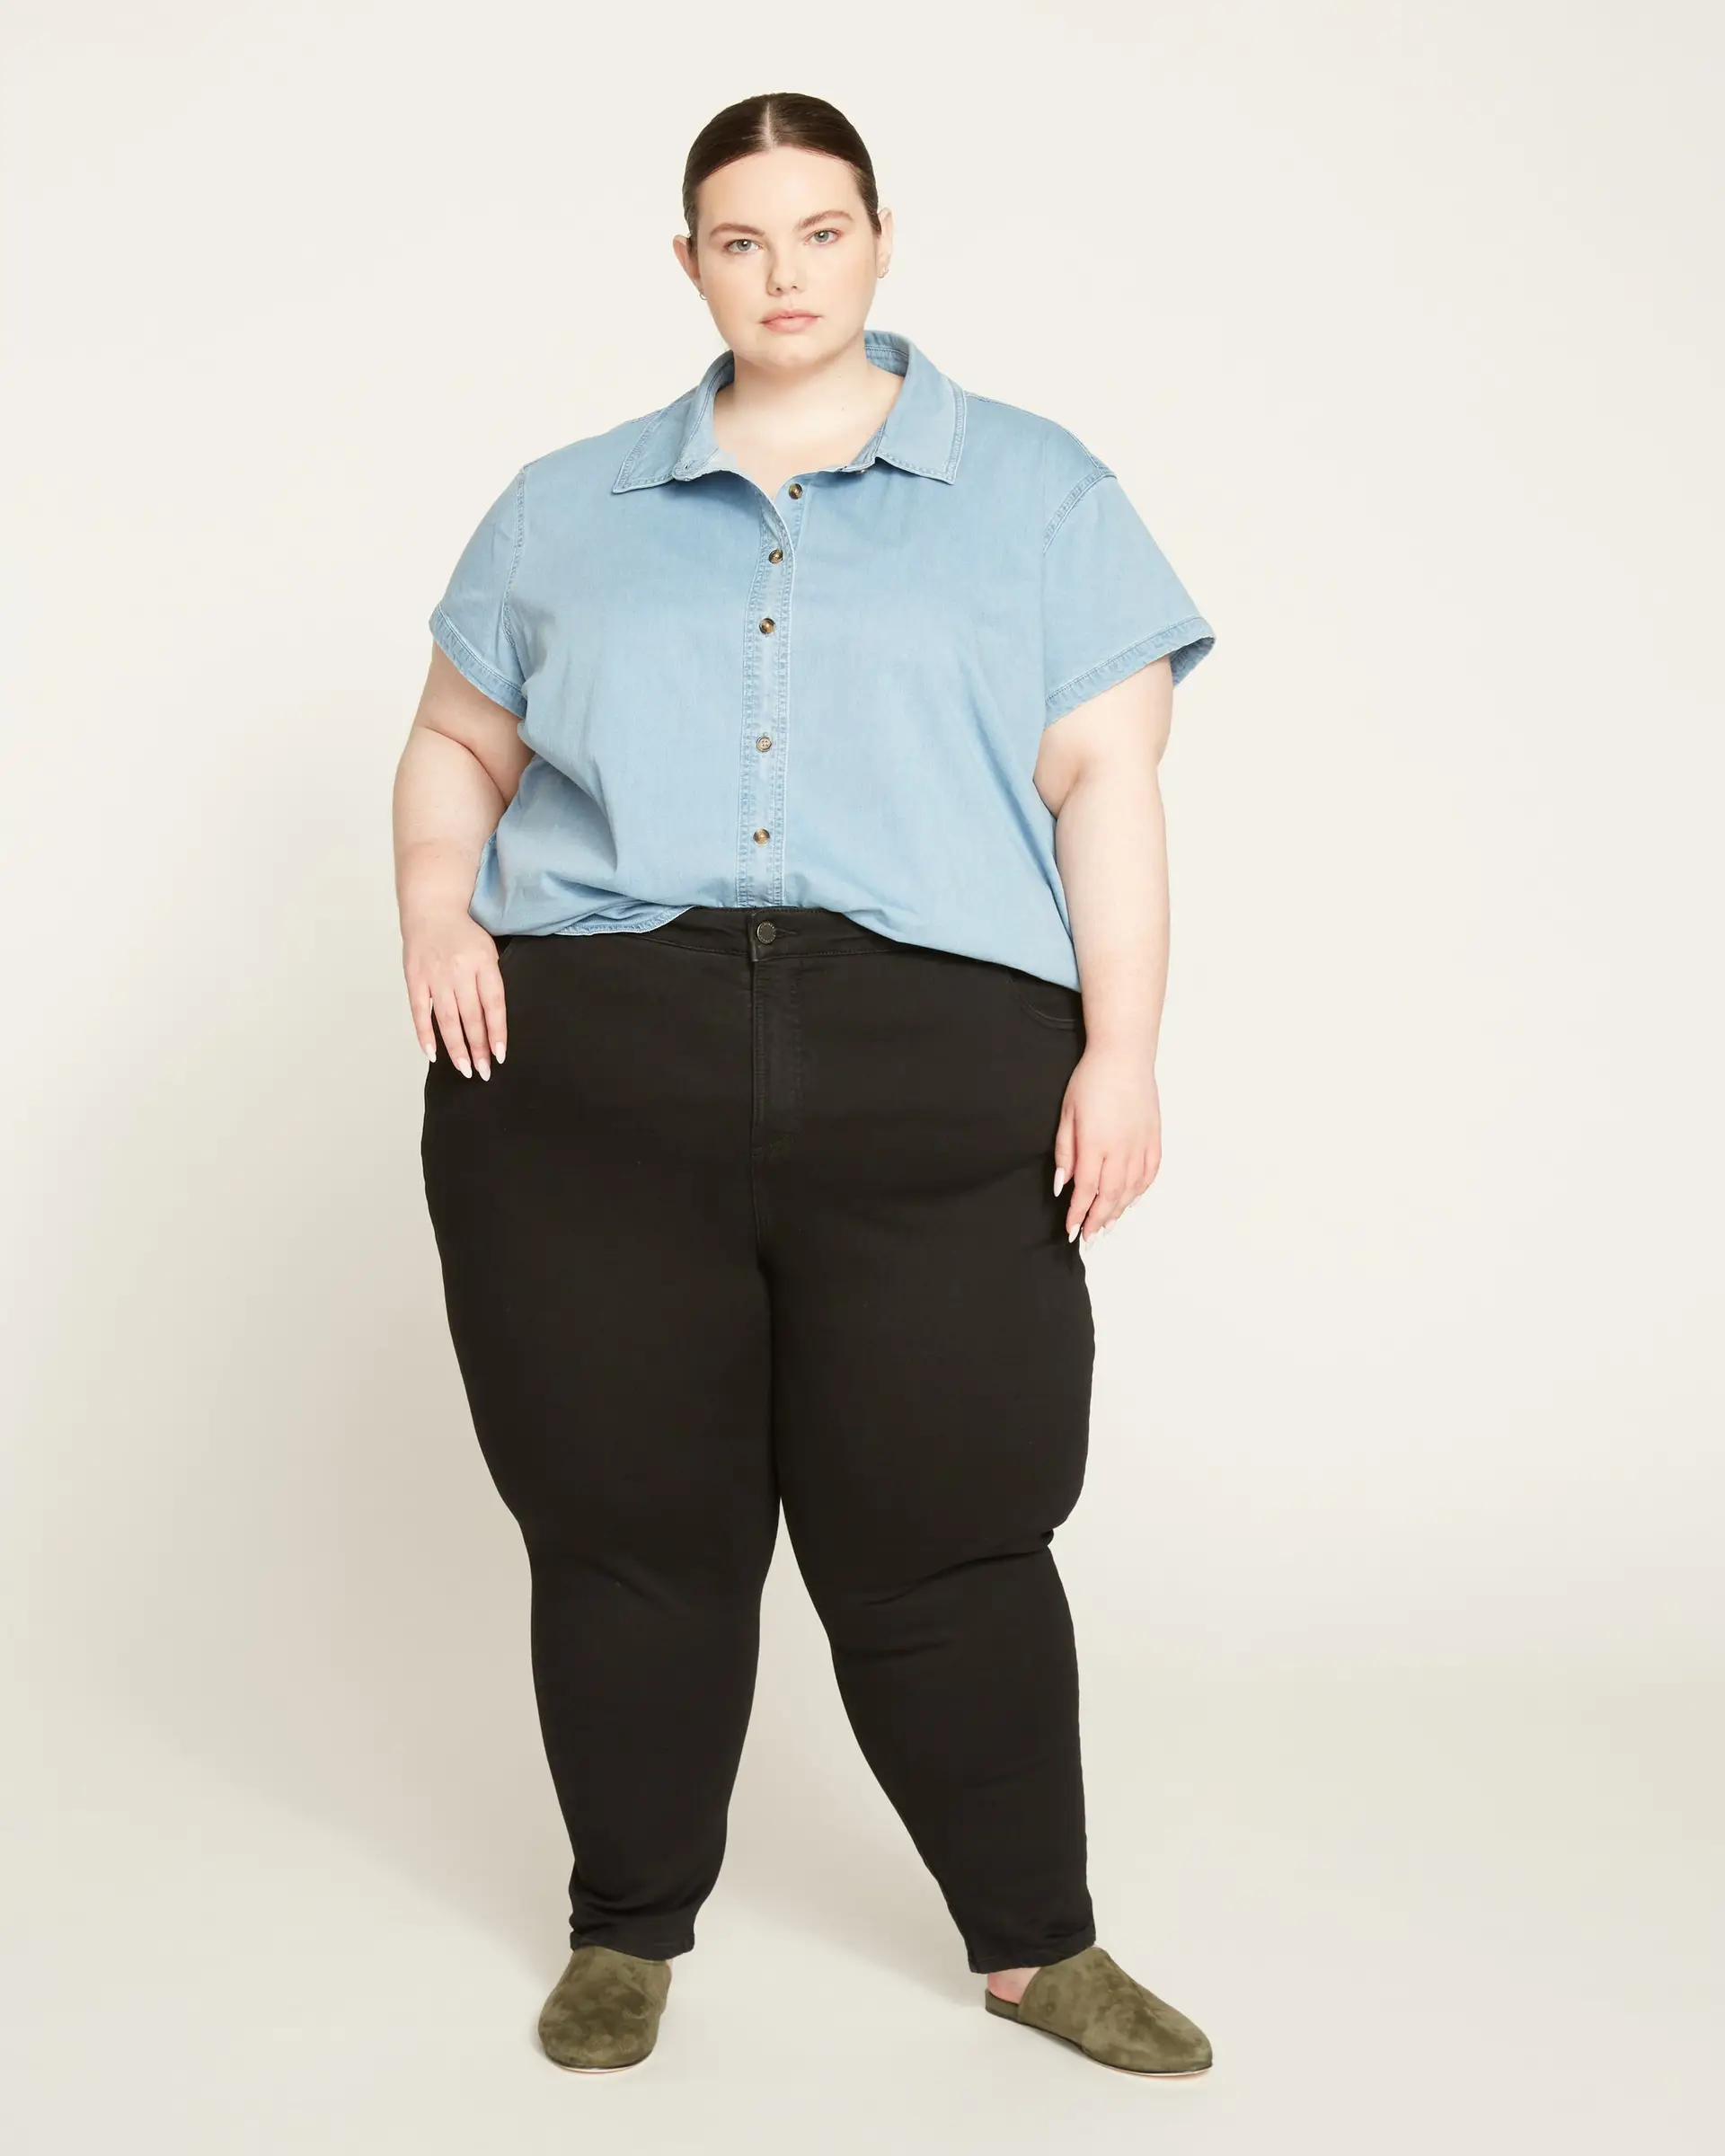 TELINVEY Women's Plus Size Work Pants,Stretch Dress Pants for